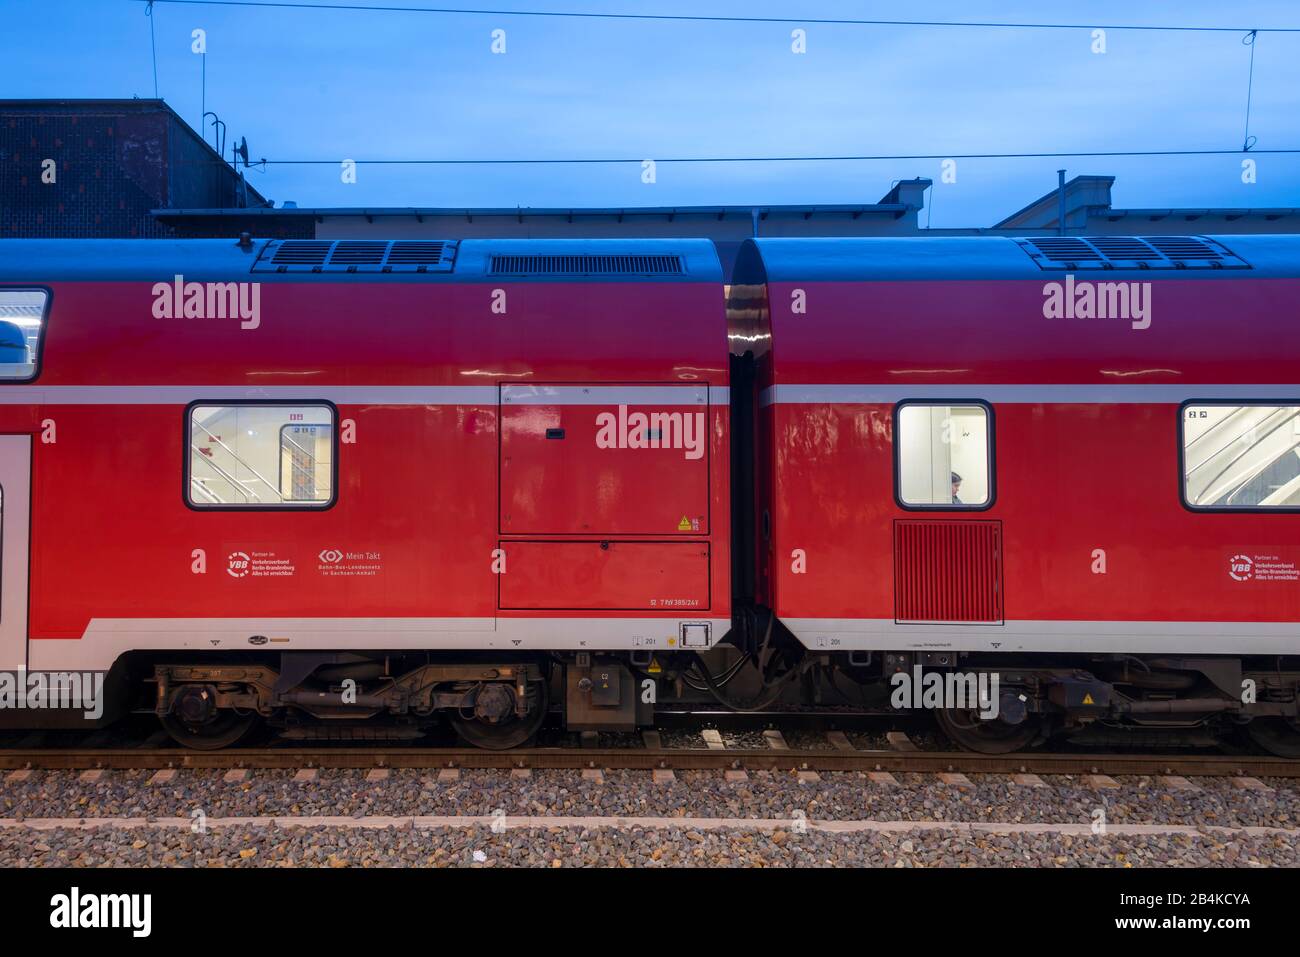 Alemania, Sajonia-Anhalt, Magdeburg, estación de tren regional, hora azul, temprano por la mañana. Foto de stock